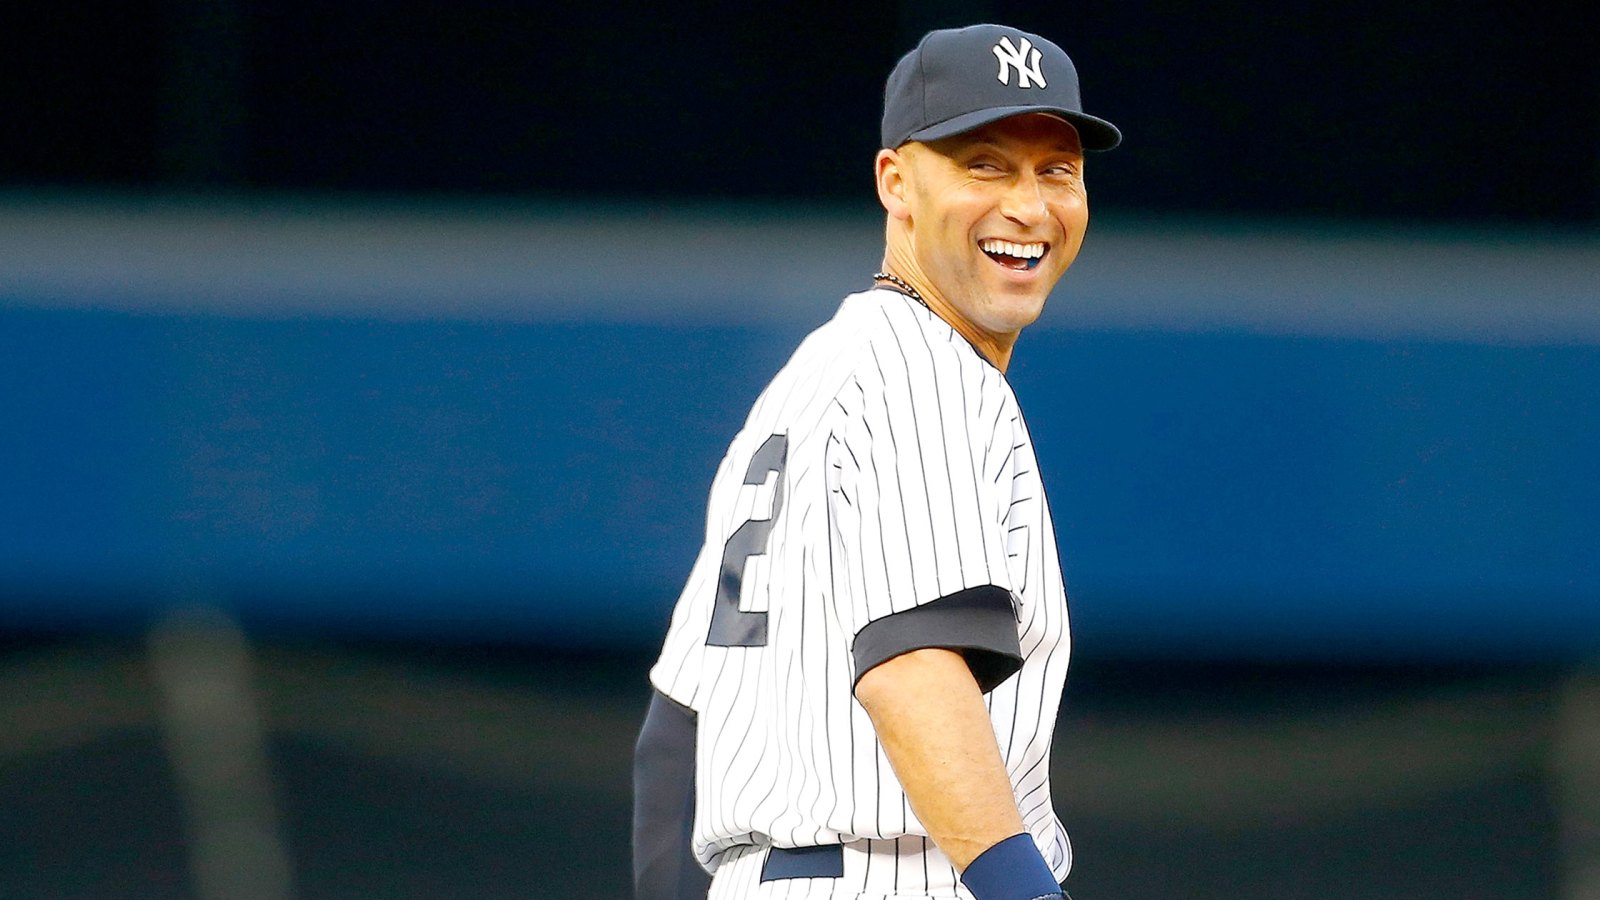 Yankees to Retire Derek Jeter's Number